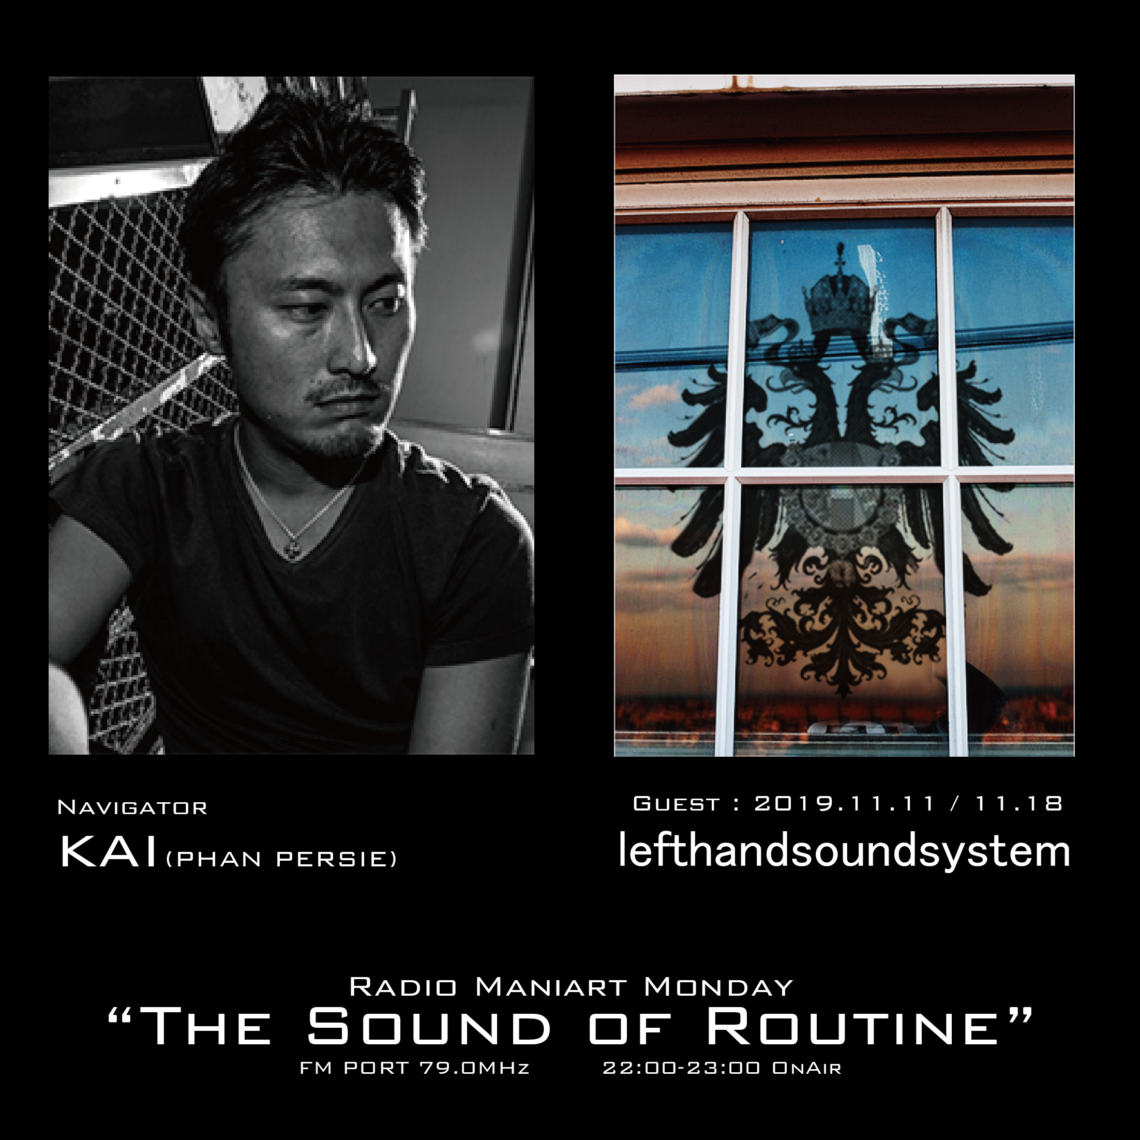 2019. 11. 11 MON, 11. 18 MON – KAI : Navigator on FM PORT / the Sound of Routine – Guest : left hand soundsystem